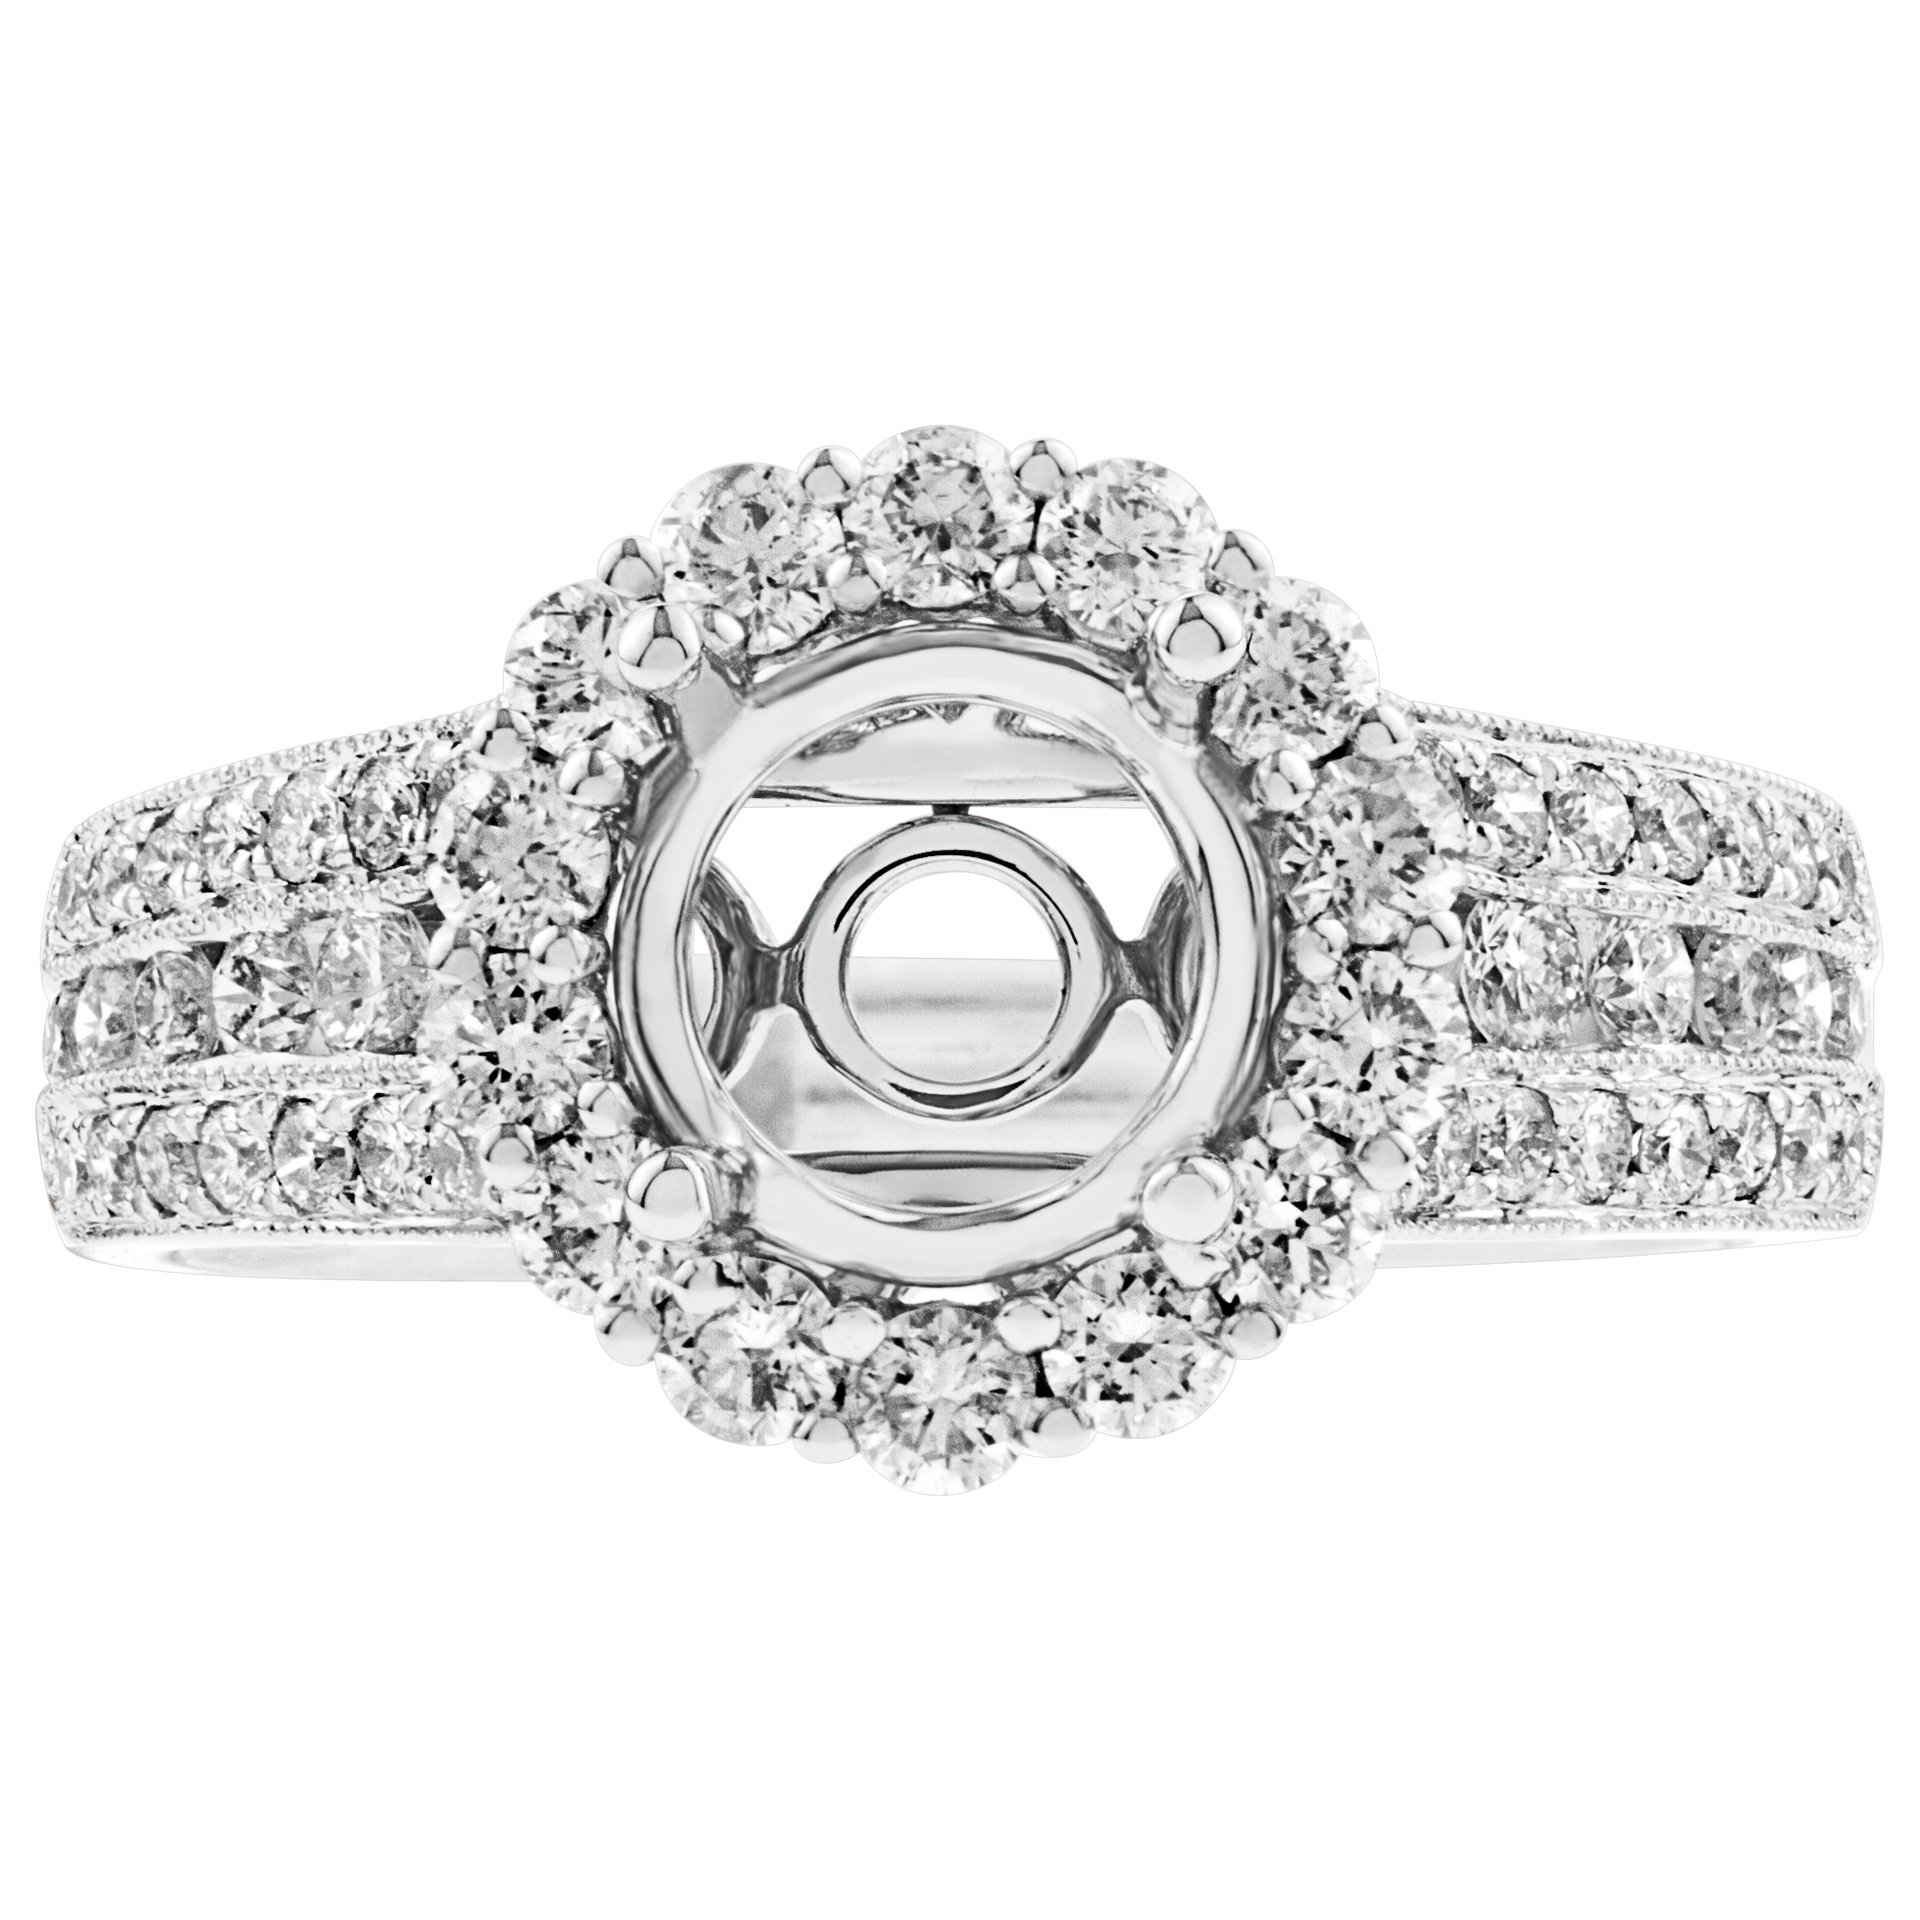 Ring setting in 18K white gold & diamonds. 1.04 carats in diamonds. Size 7